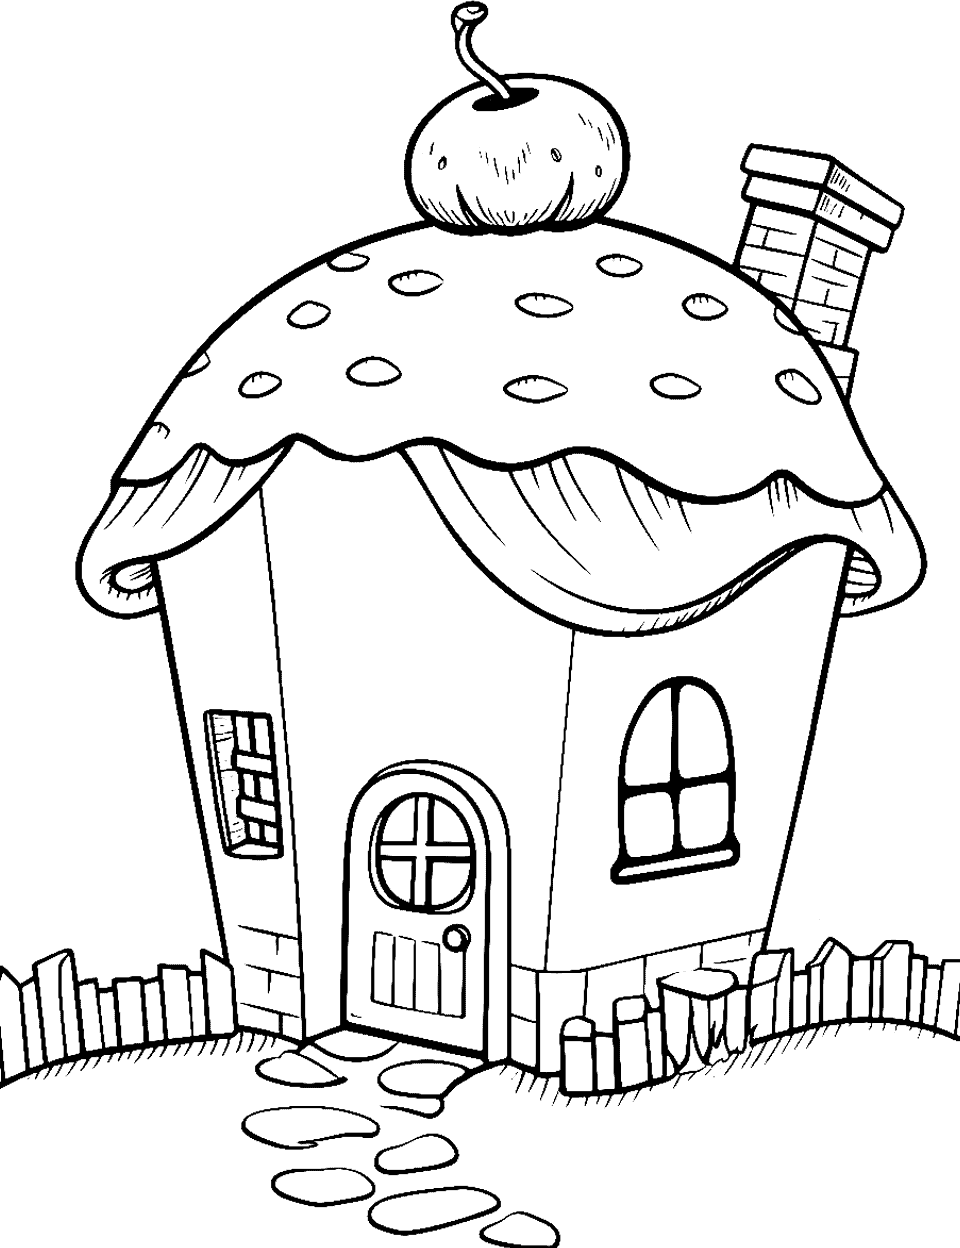 Cupcake Sweet Home Coloring Page - A house shaped like a cupcake.